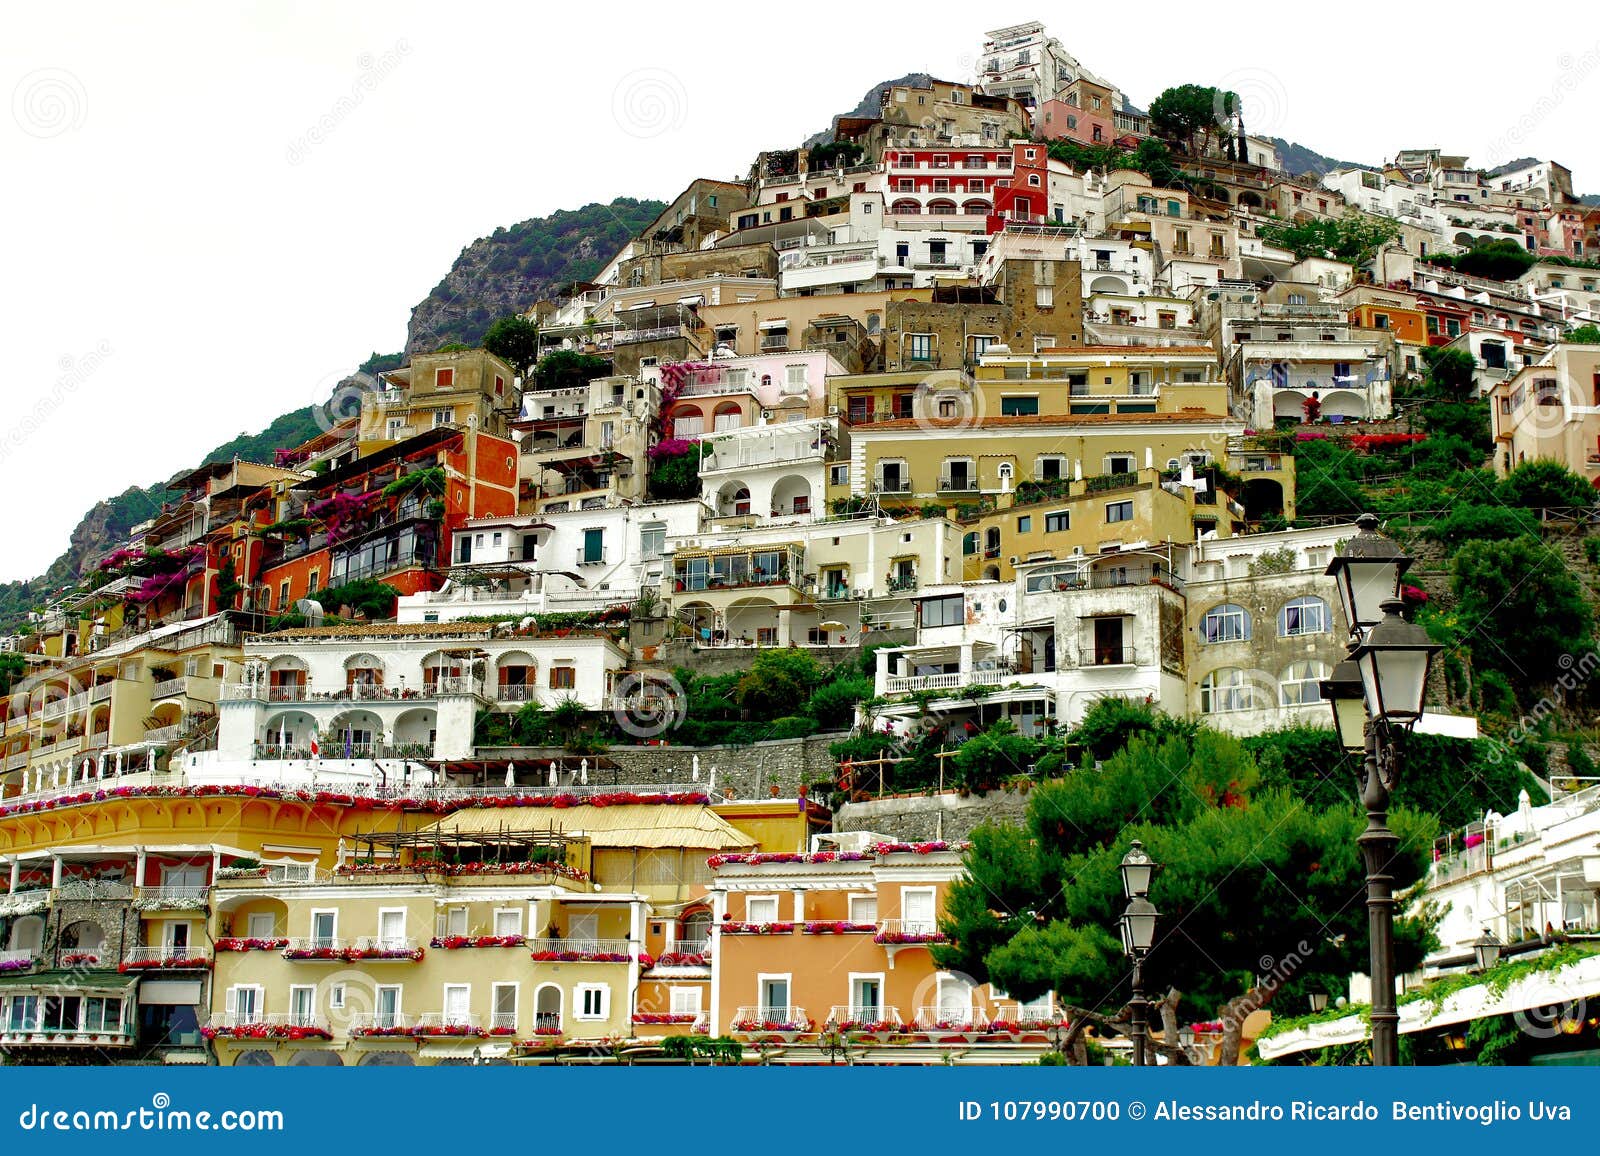 Positano Village Colourful Houses View Stock Photo - Image of ...